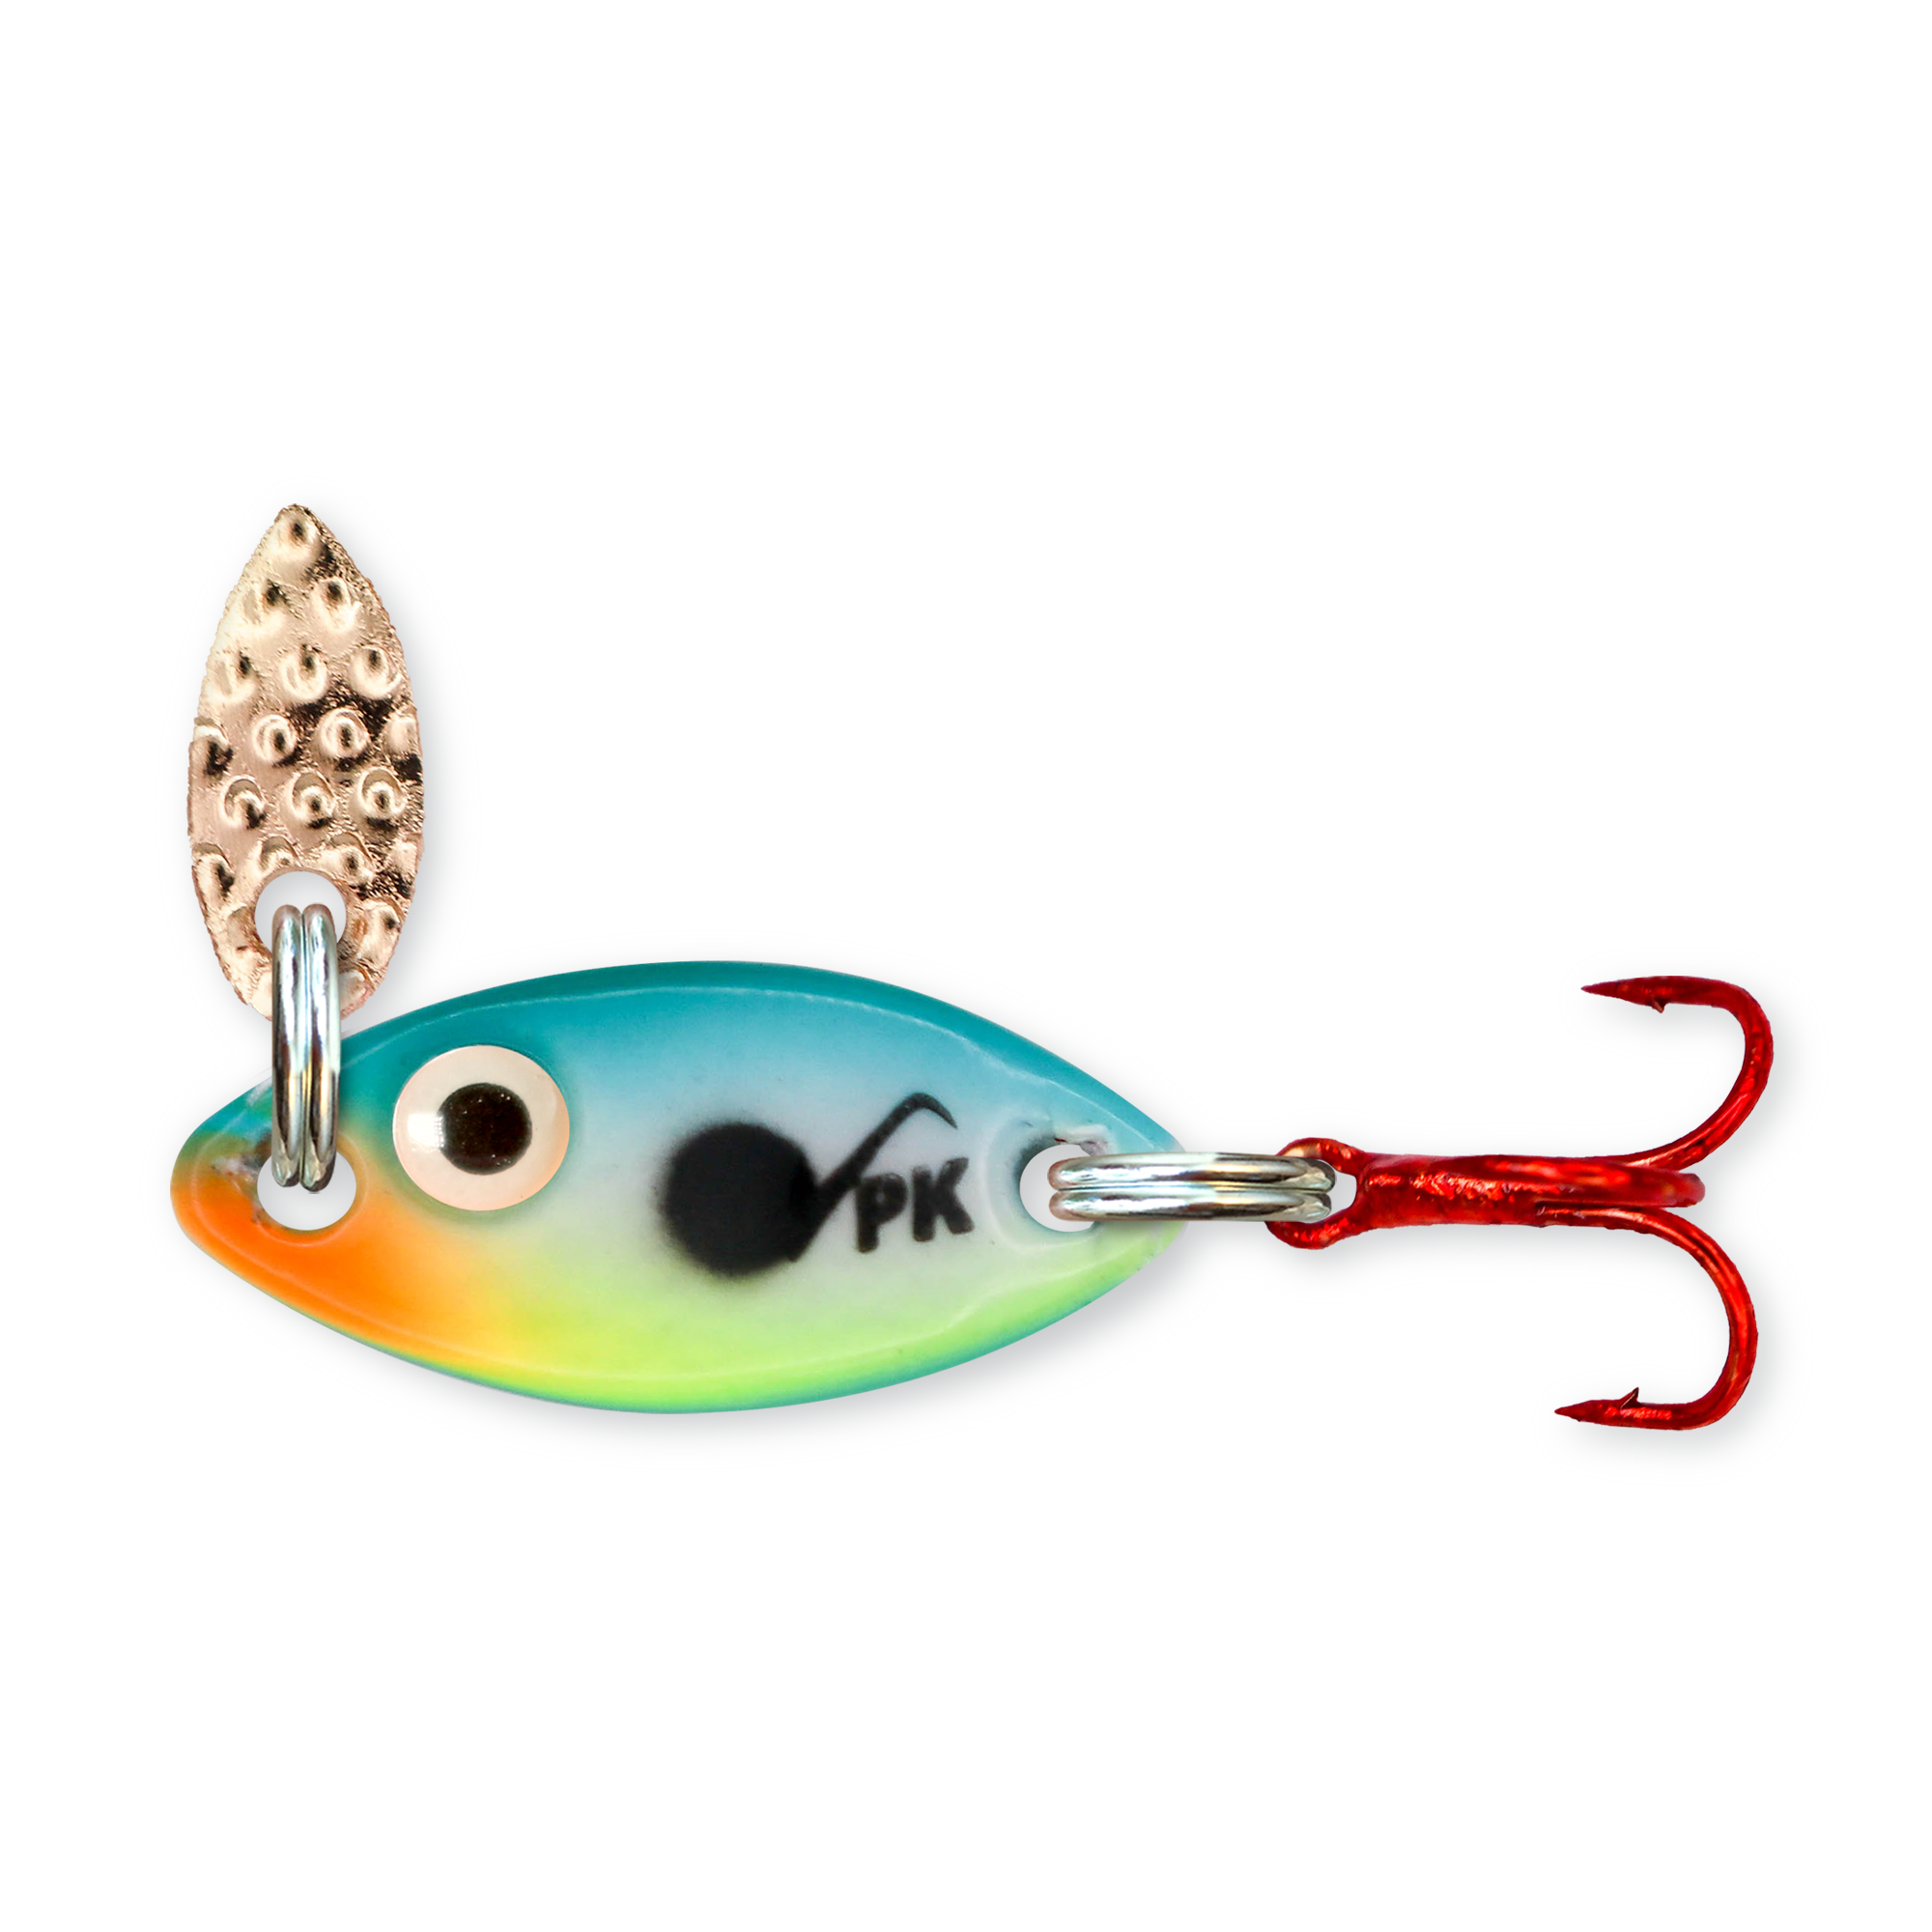 Tungsten - PK Predator Flash Fishing Spoon